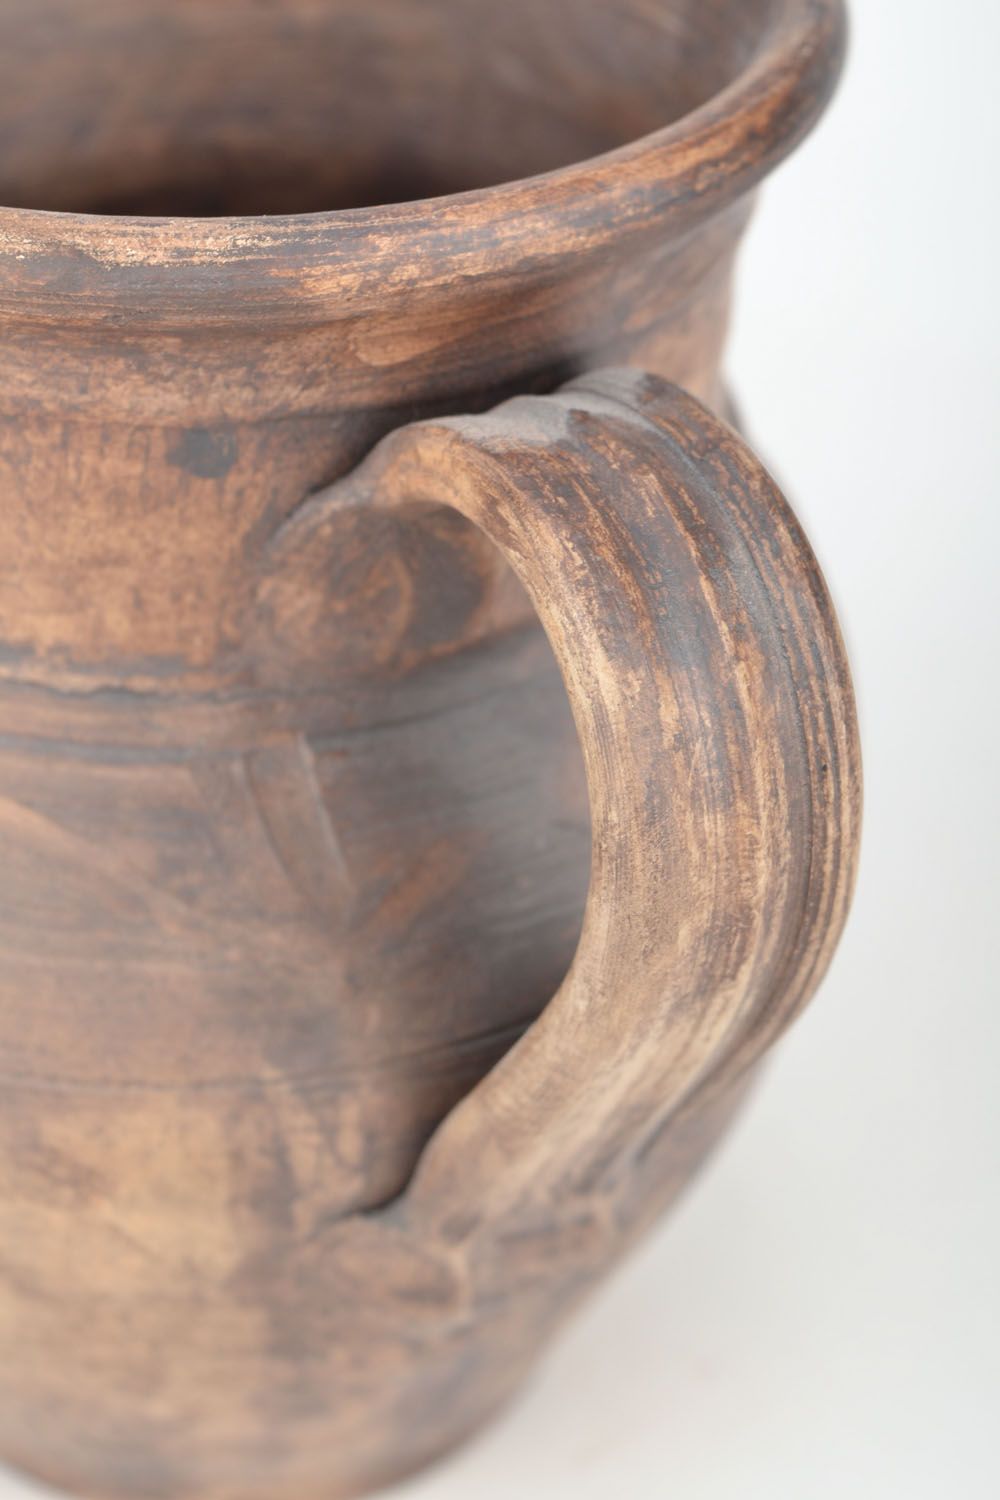 30 oz ceramic lead-free glazed milk pitcher in classic style 5,5 inches, 1 lb photo 5